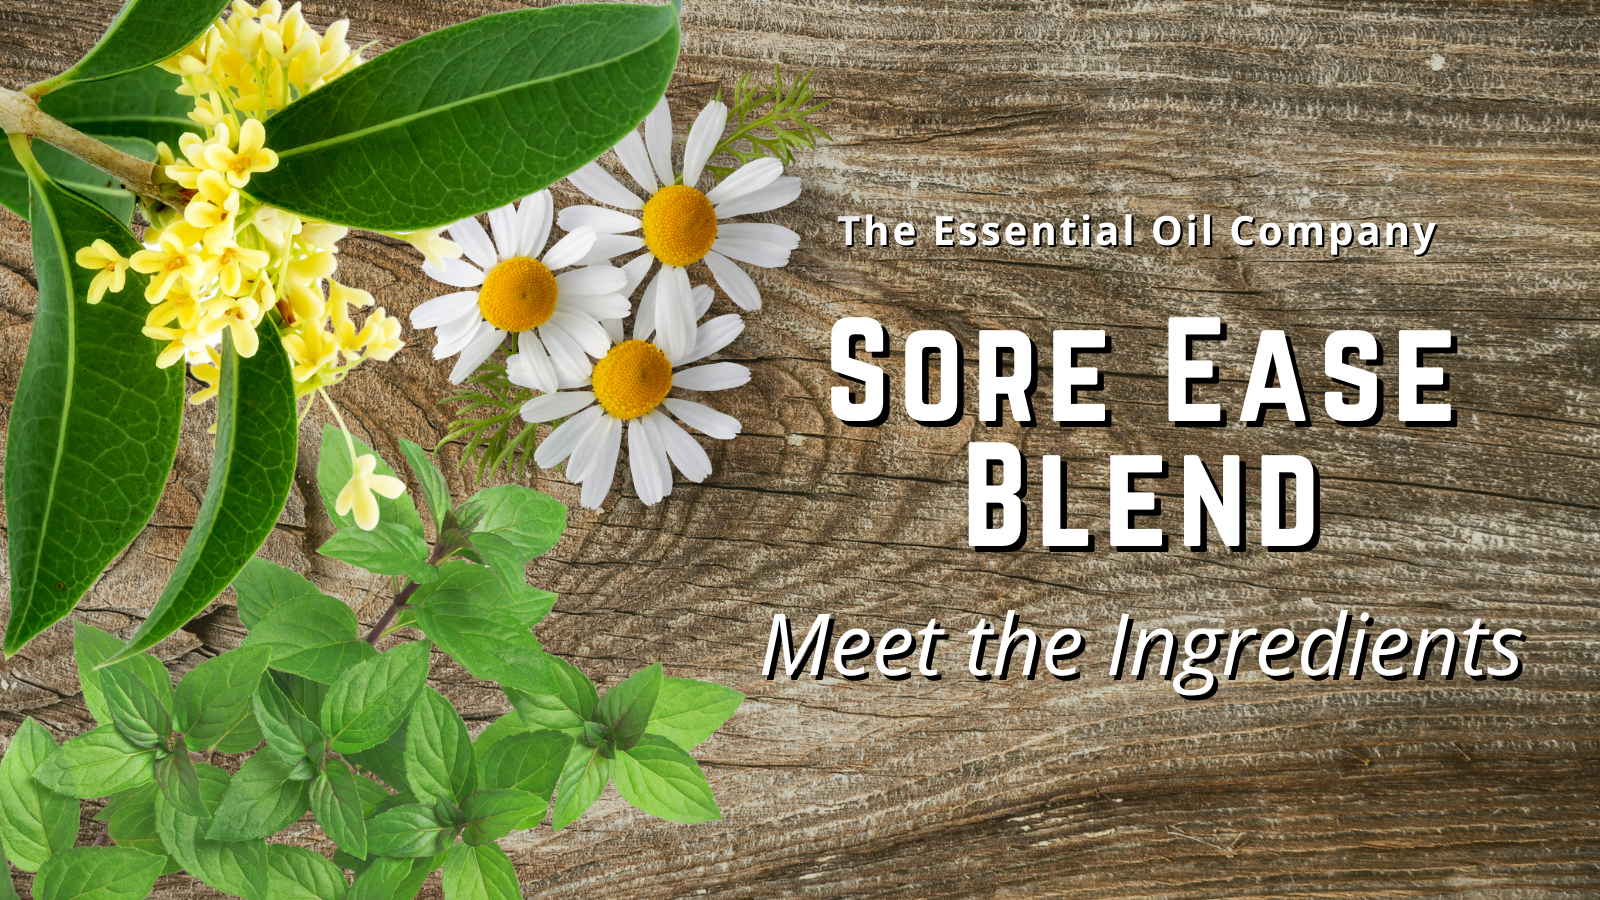 Sore Ease Blend: Meet the Ingredients